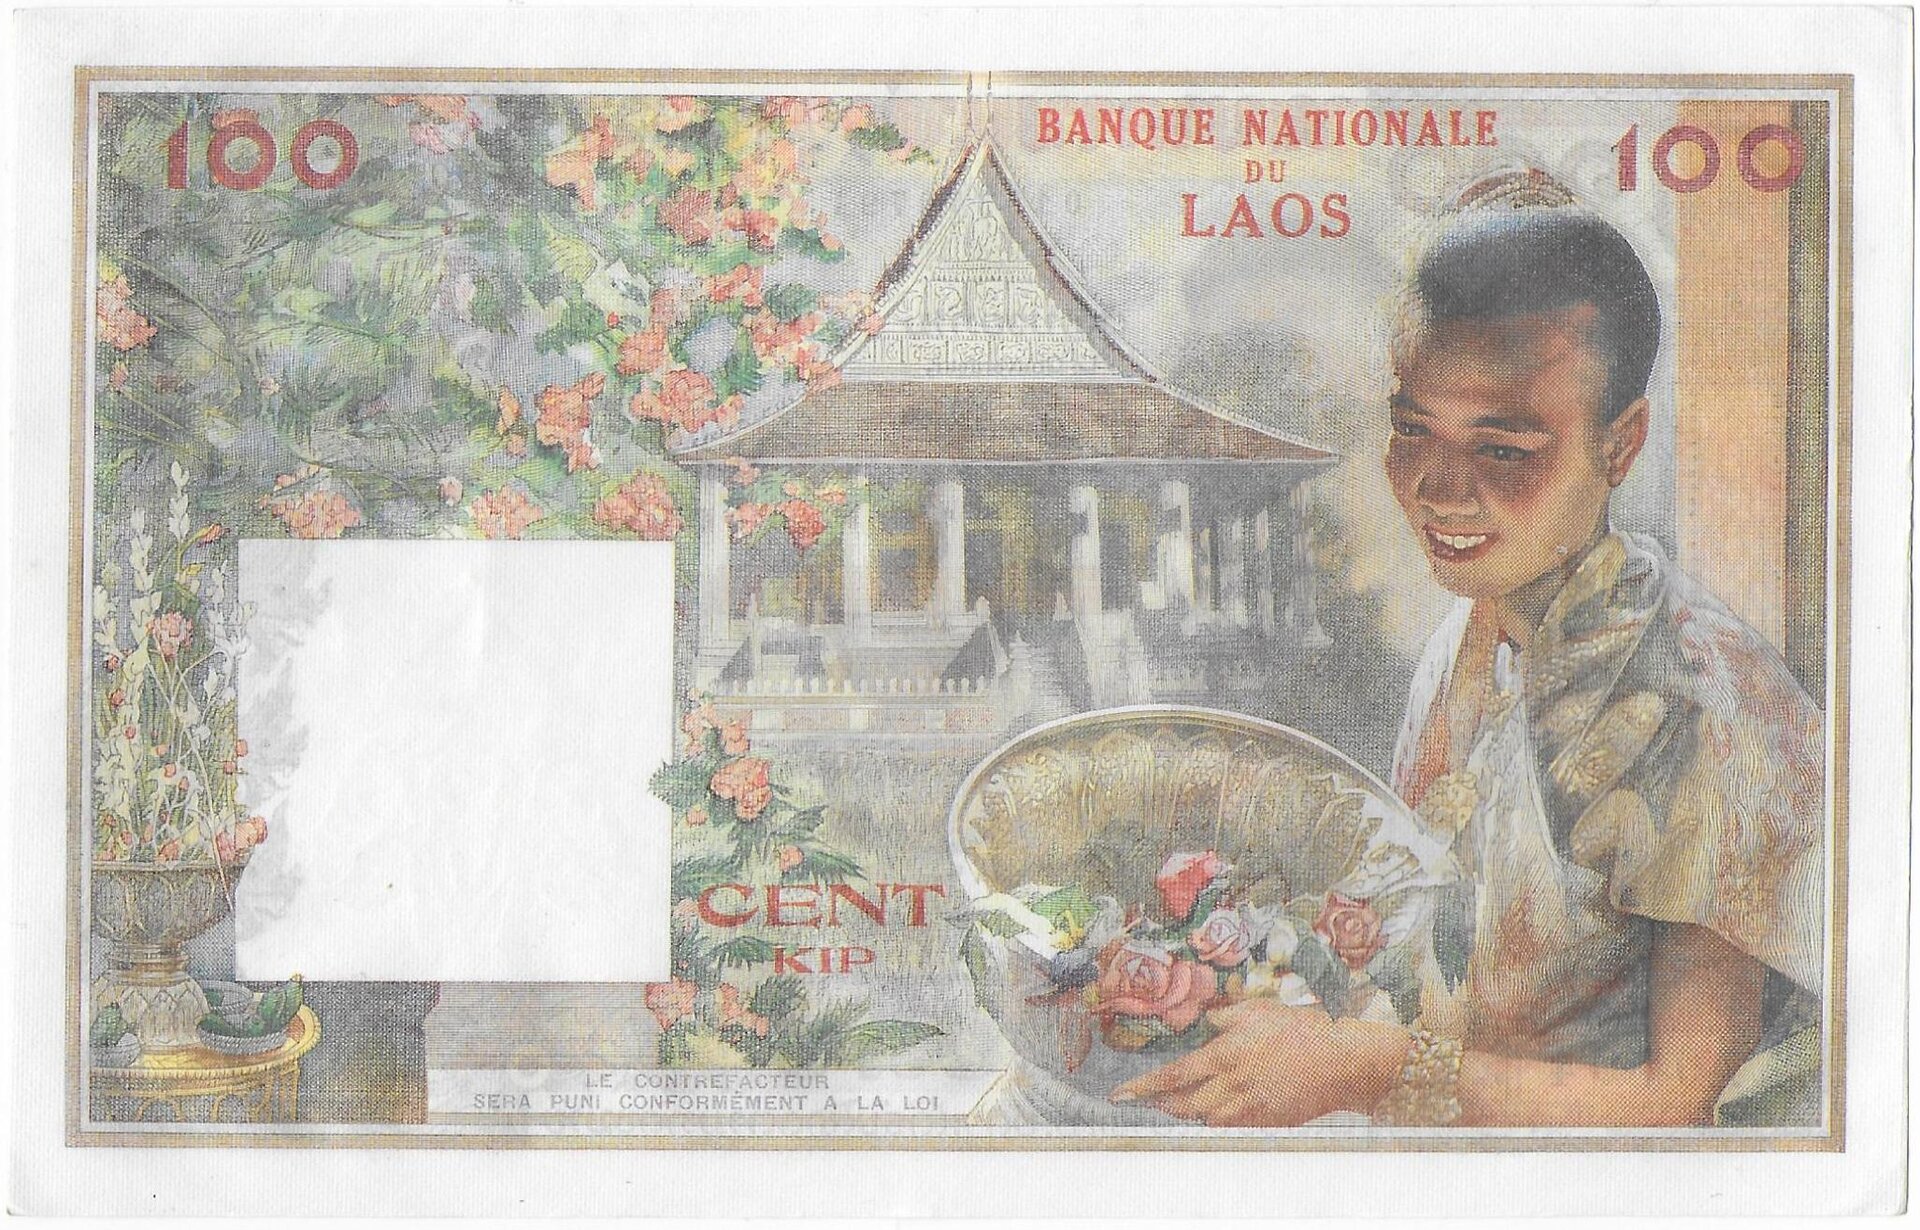 Laos 100 Kip back.jpg